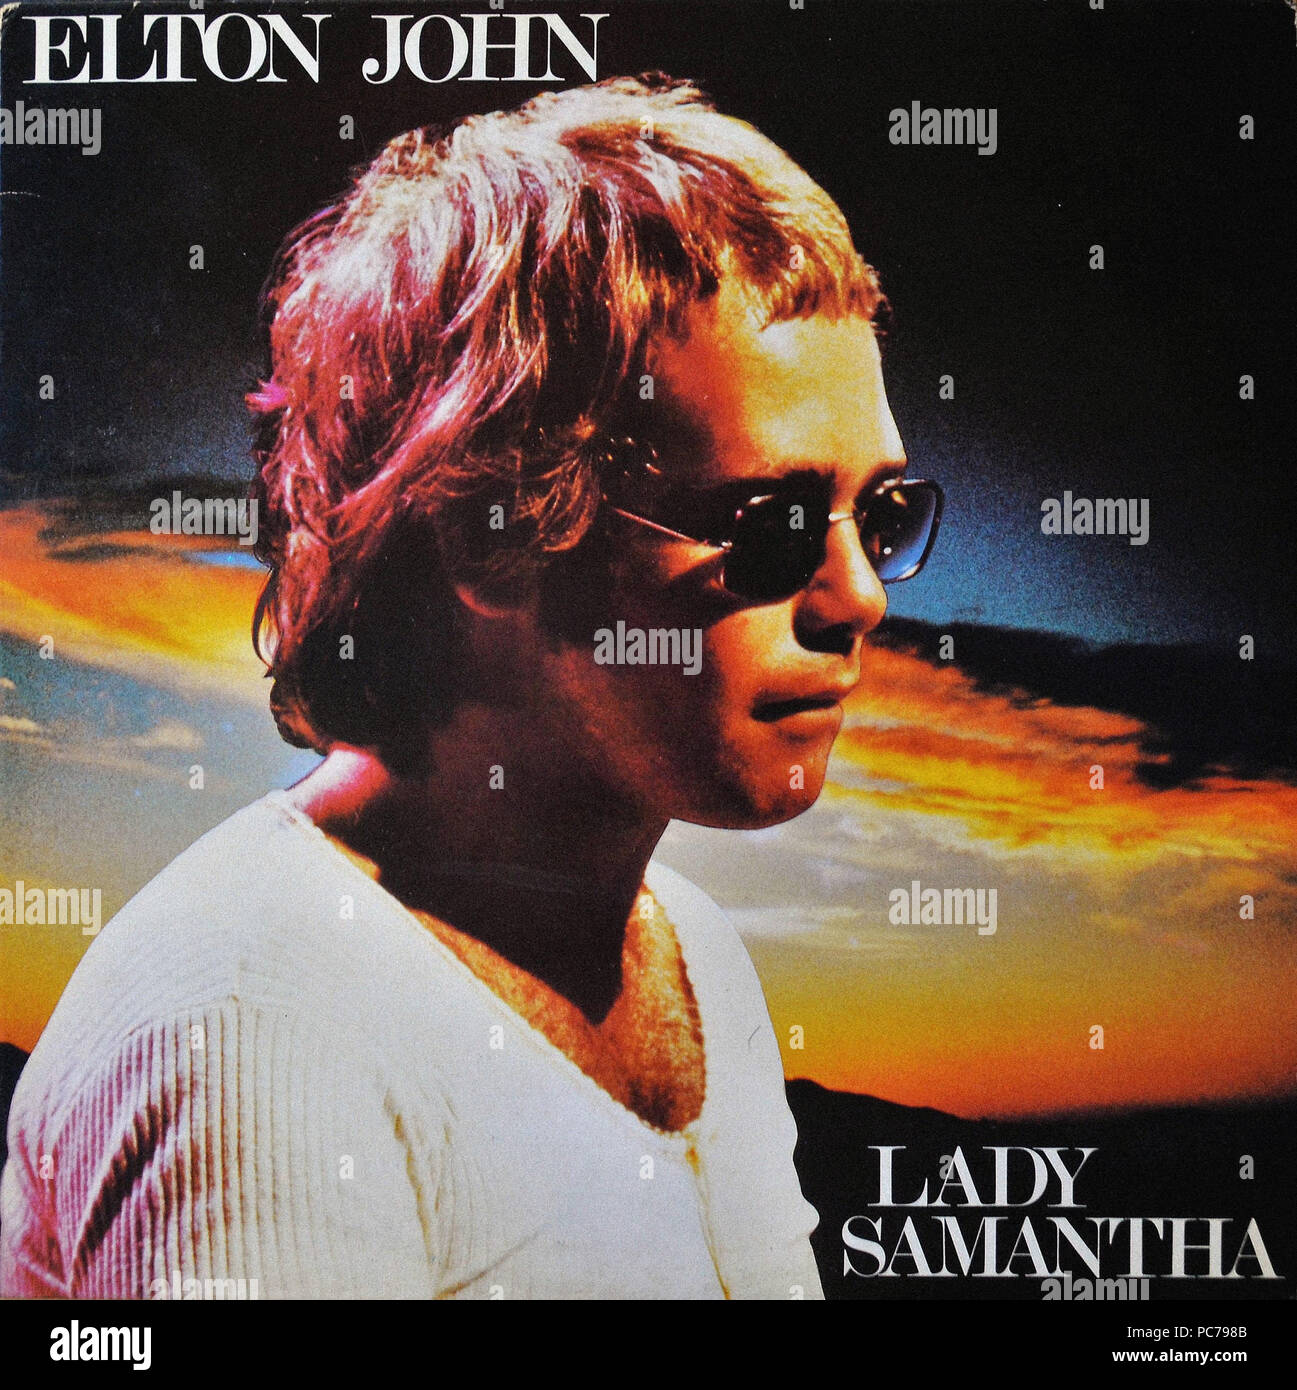 elton john album cover posters